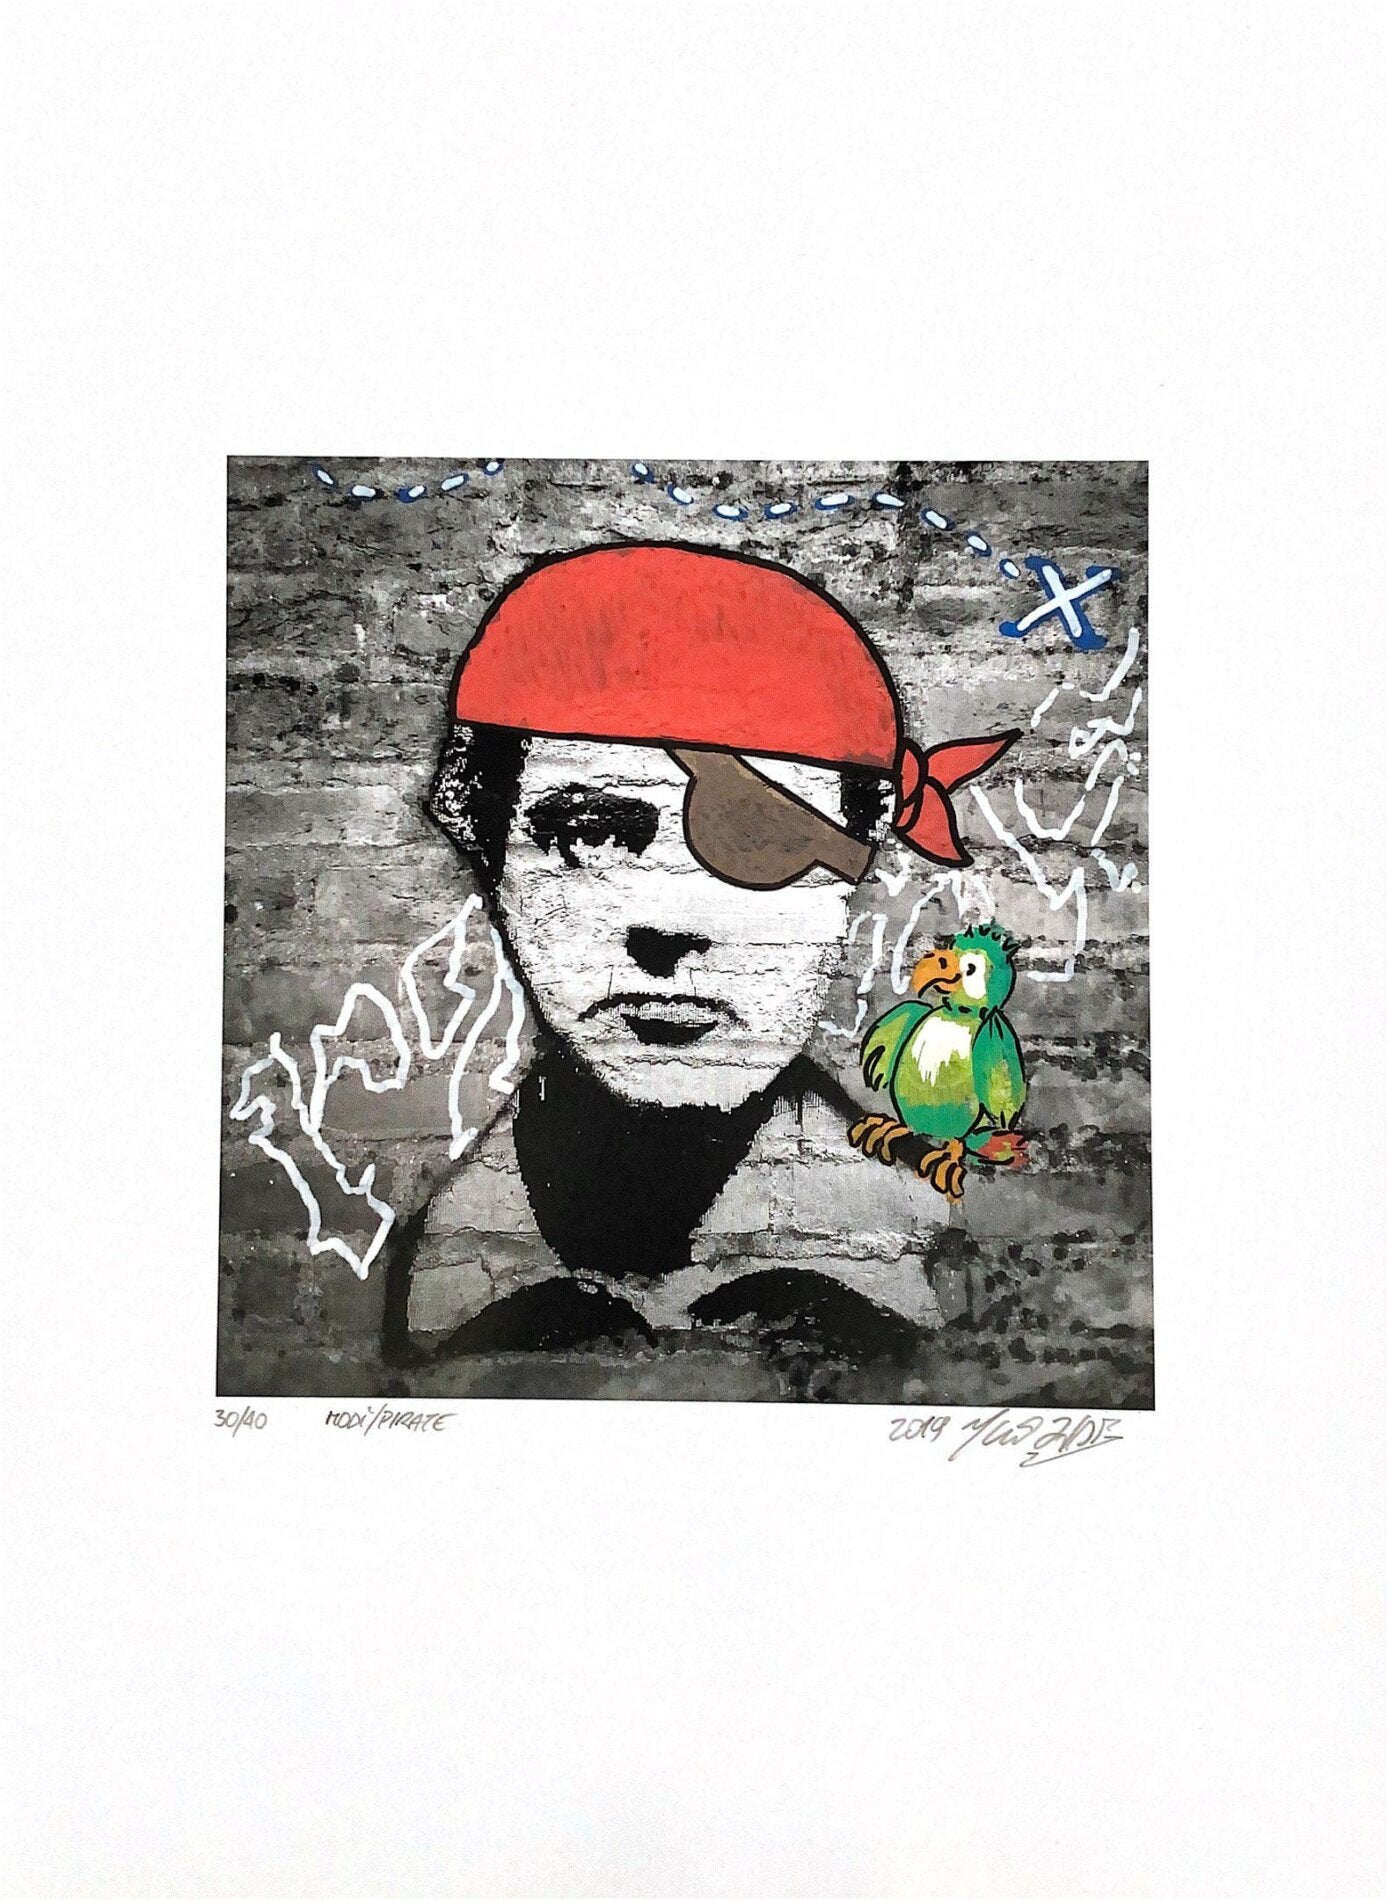 Modì Pirate di Shife. Stampa giclée stampa su carta 200 gsm rappresentante un'interpretazione personale del viso di Modigliani, parte di una serie di stampe dell'artista | CD Studio d'Arte